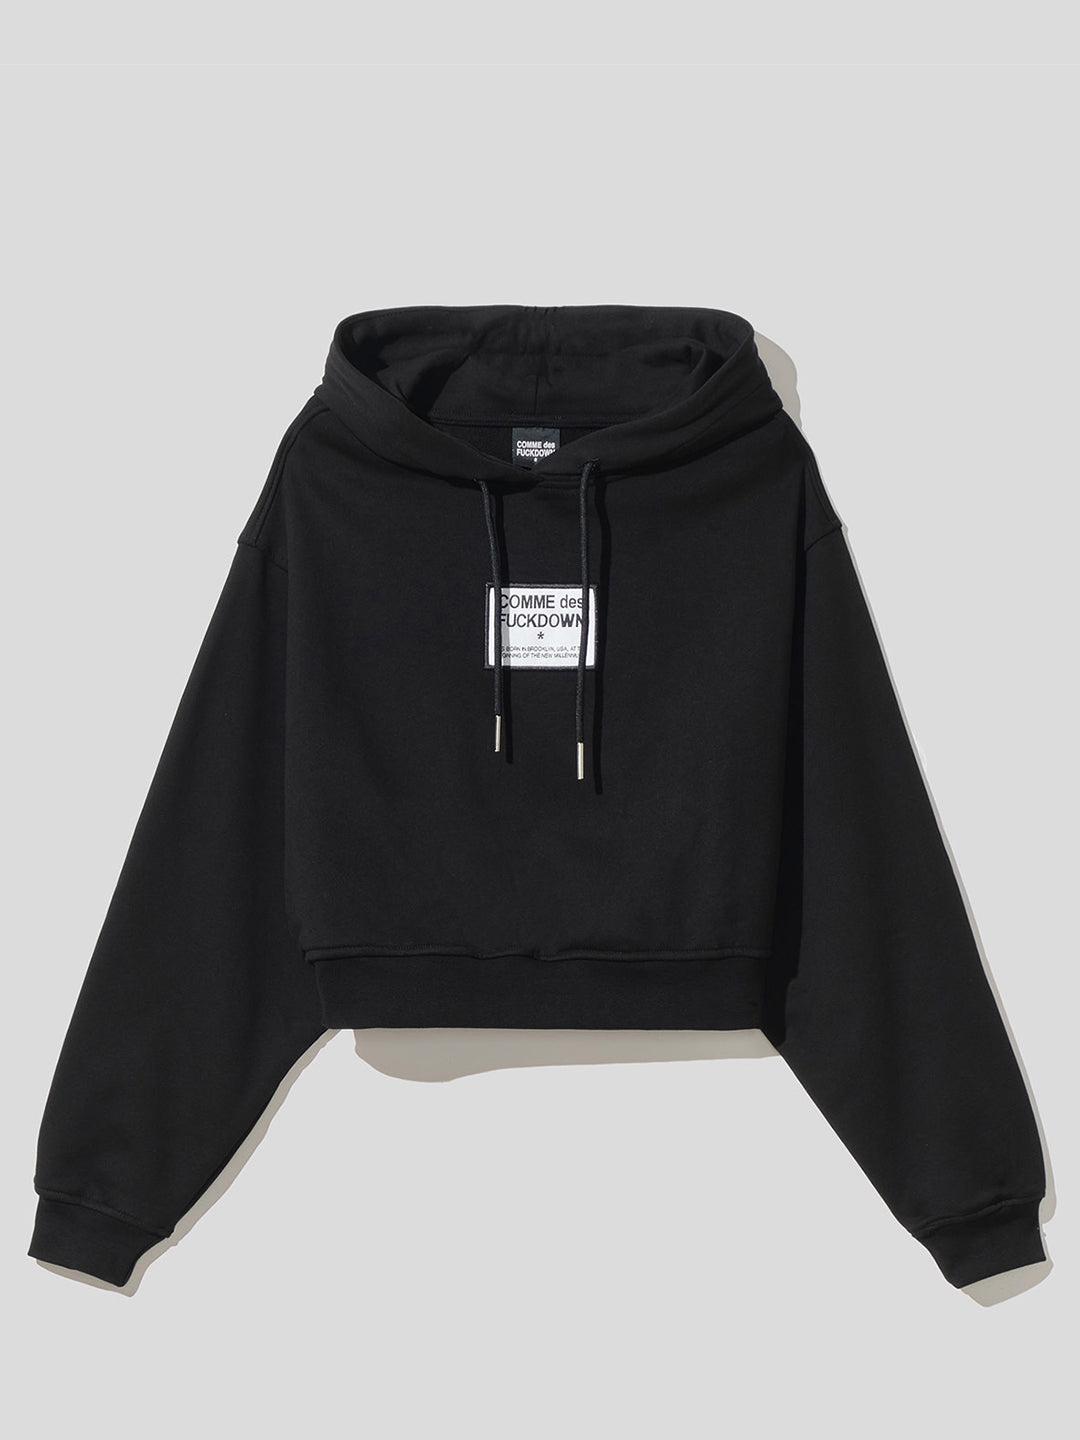 Comme des fuckdown black sweatshirt with logo patch